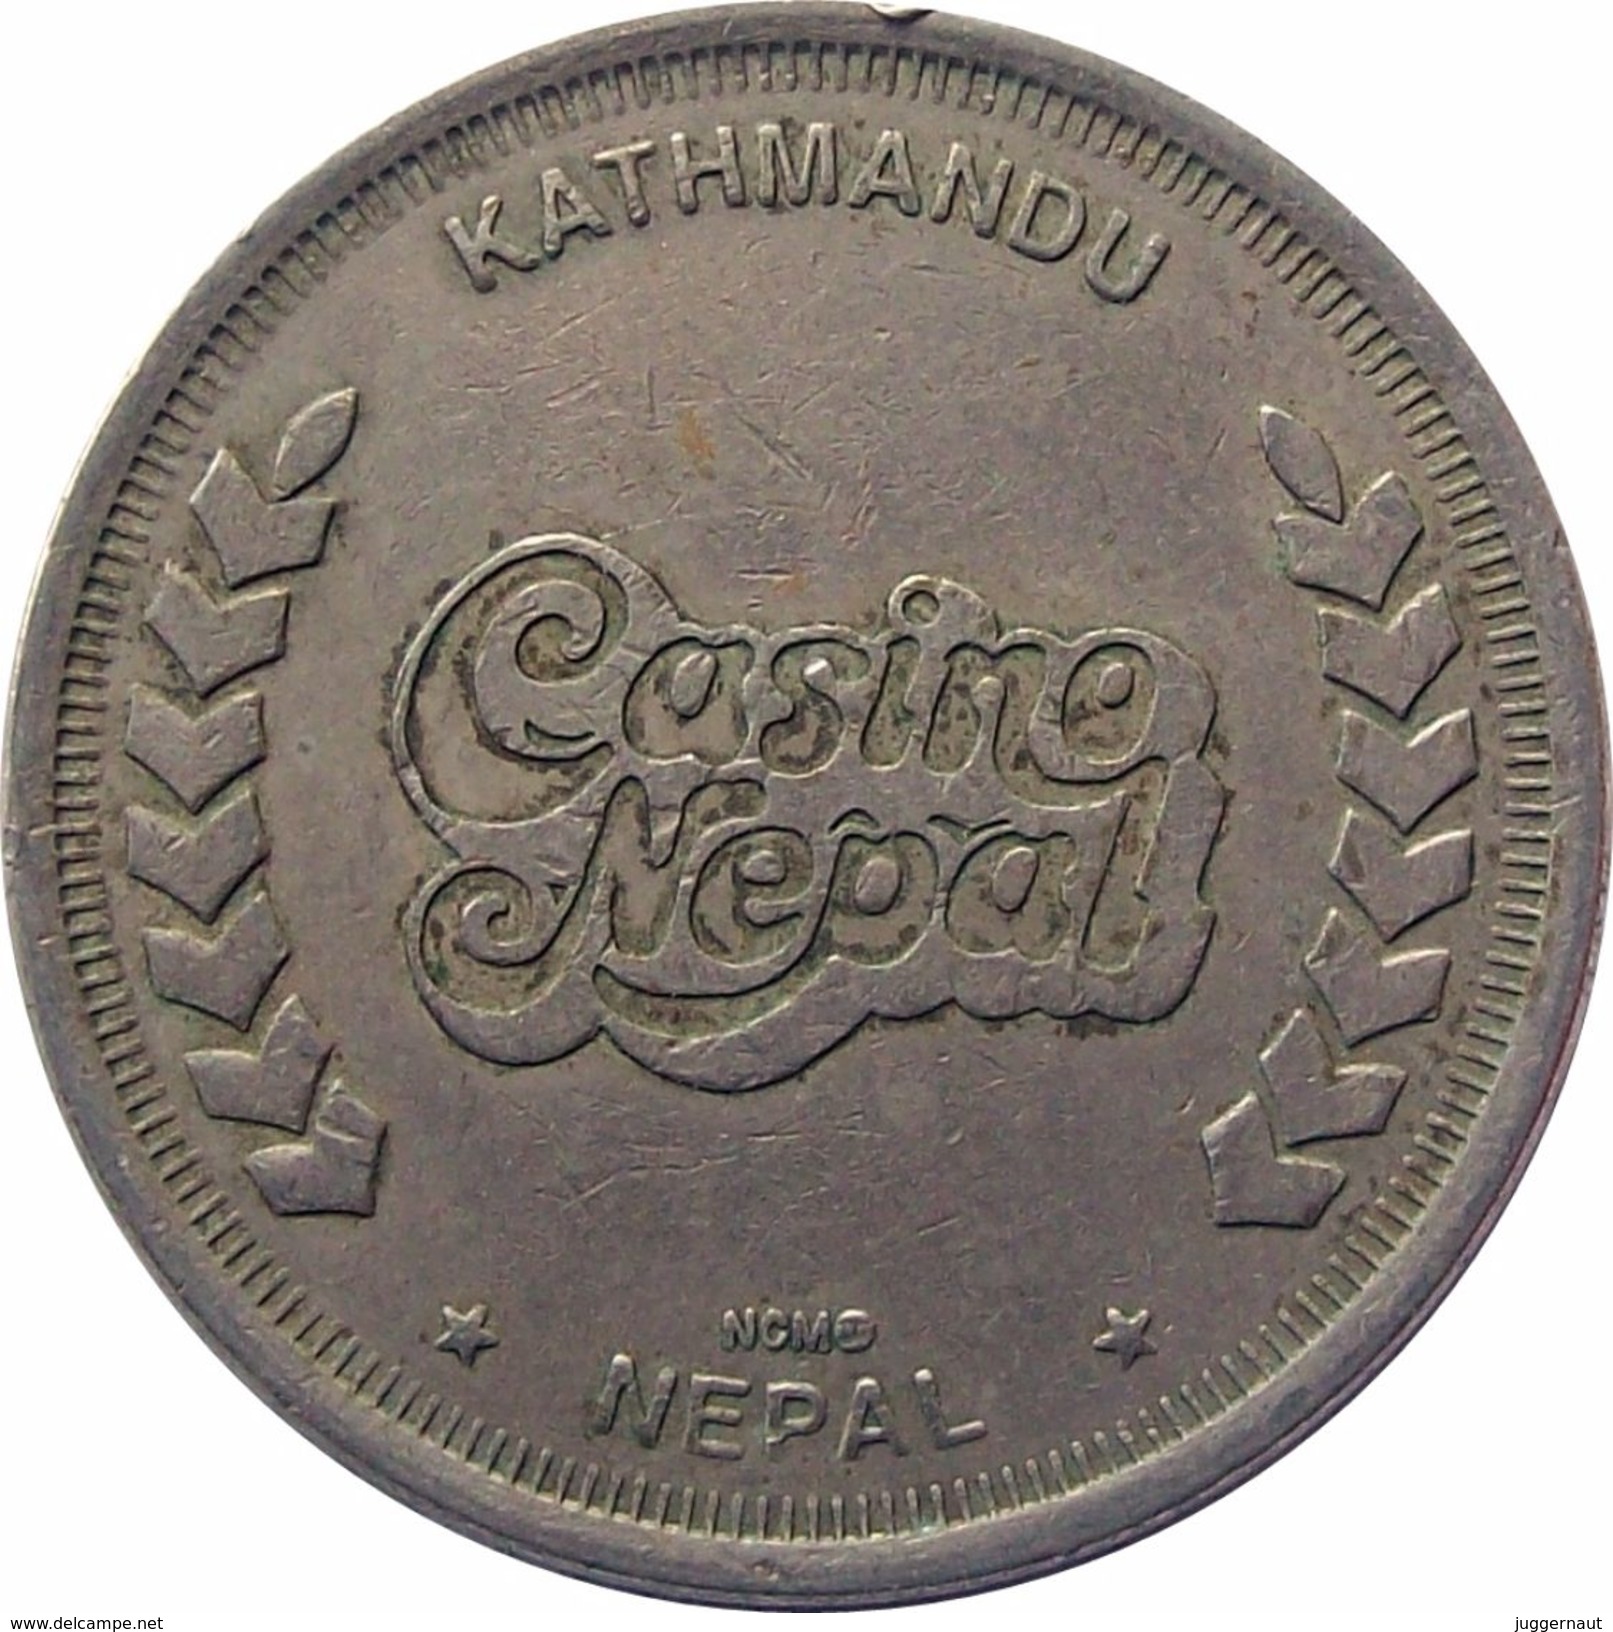 CASINO NEPAL GAME TOKEN COIN COPPER-NICKEL ND VERY FINE VF - Casino